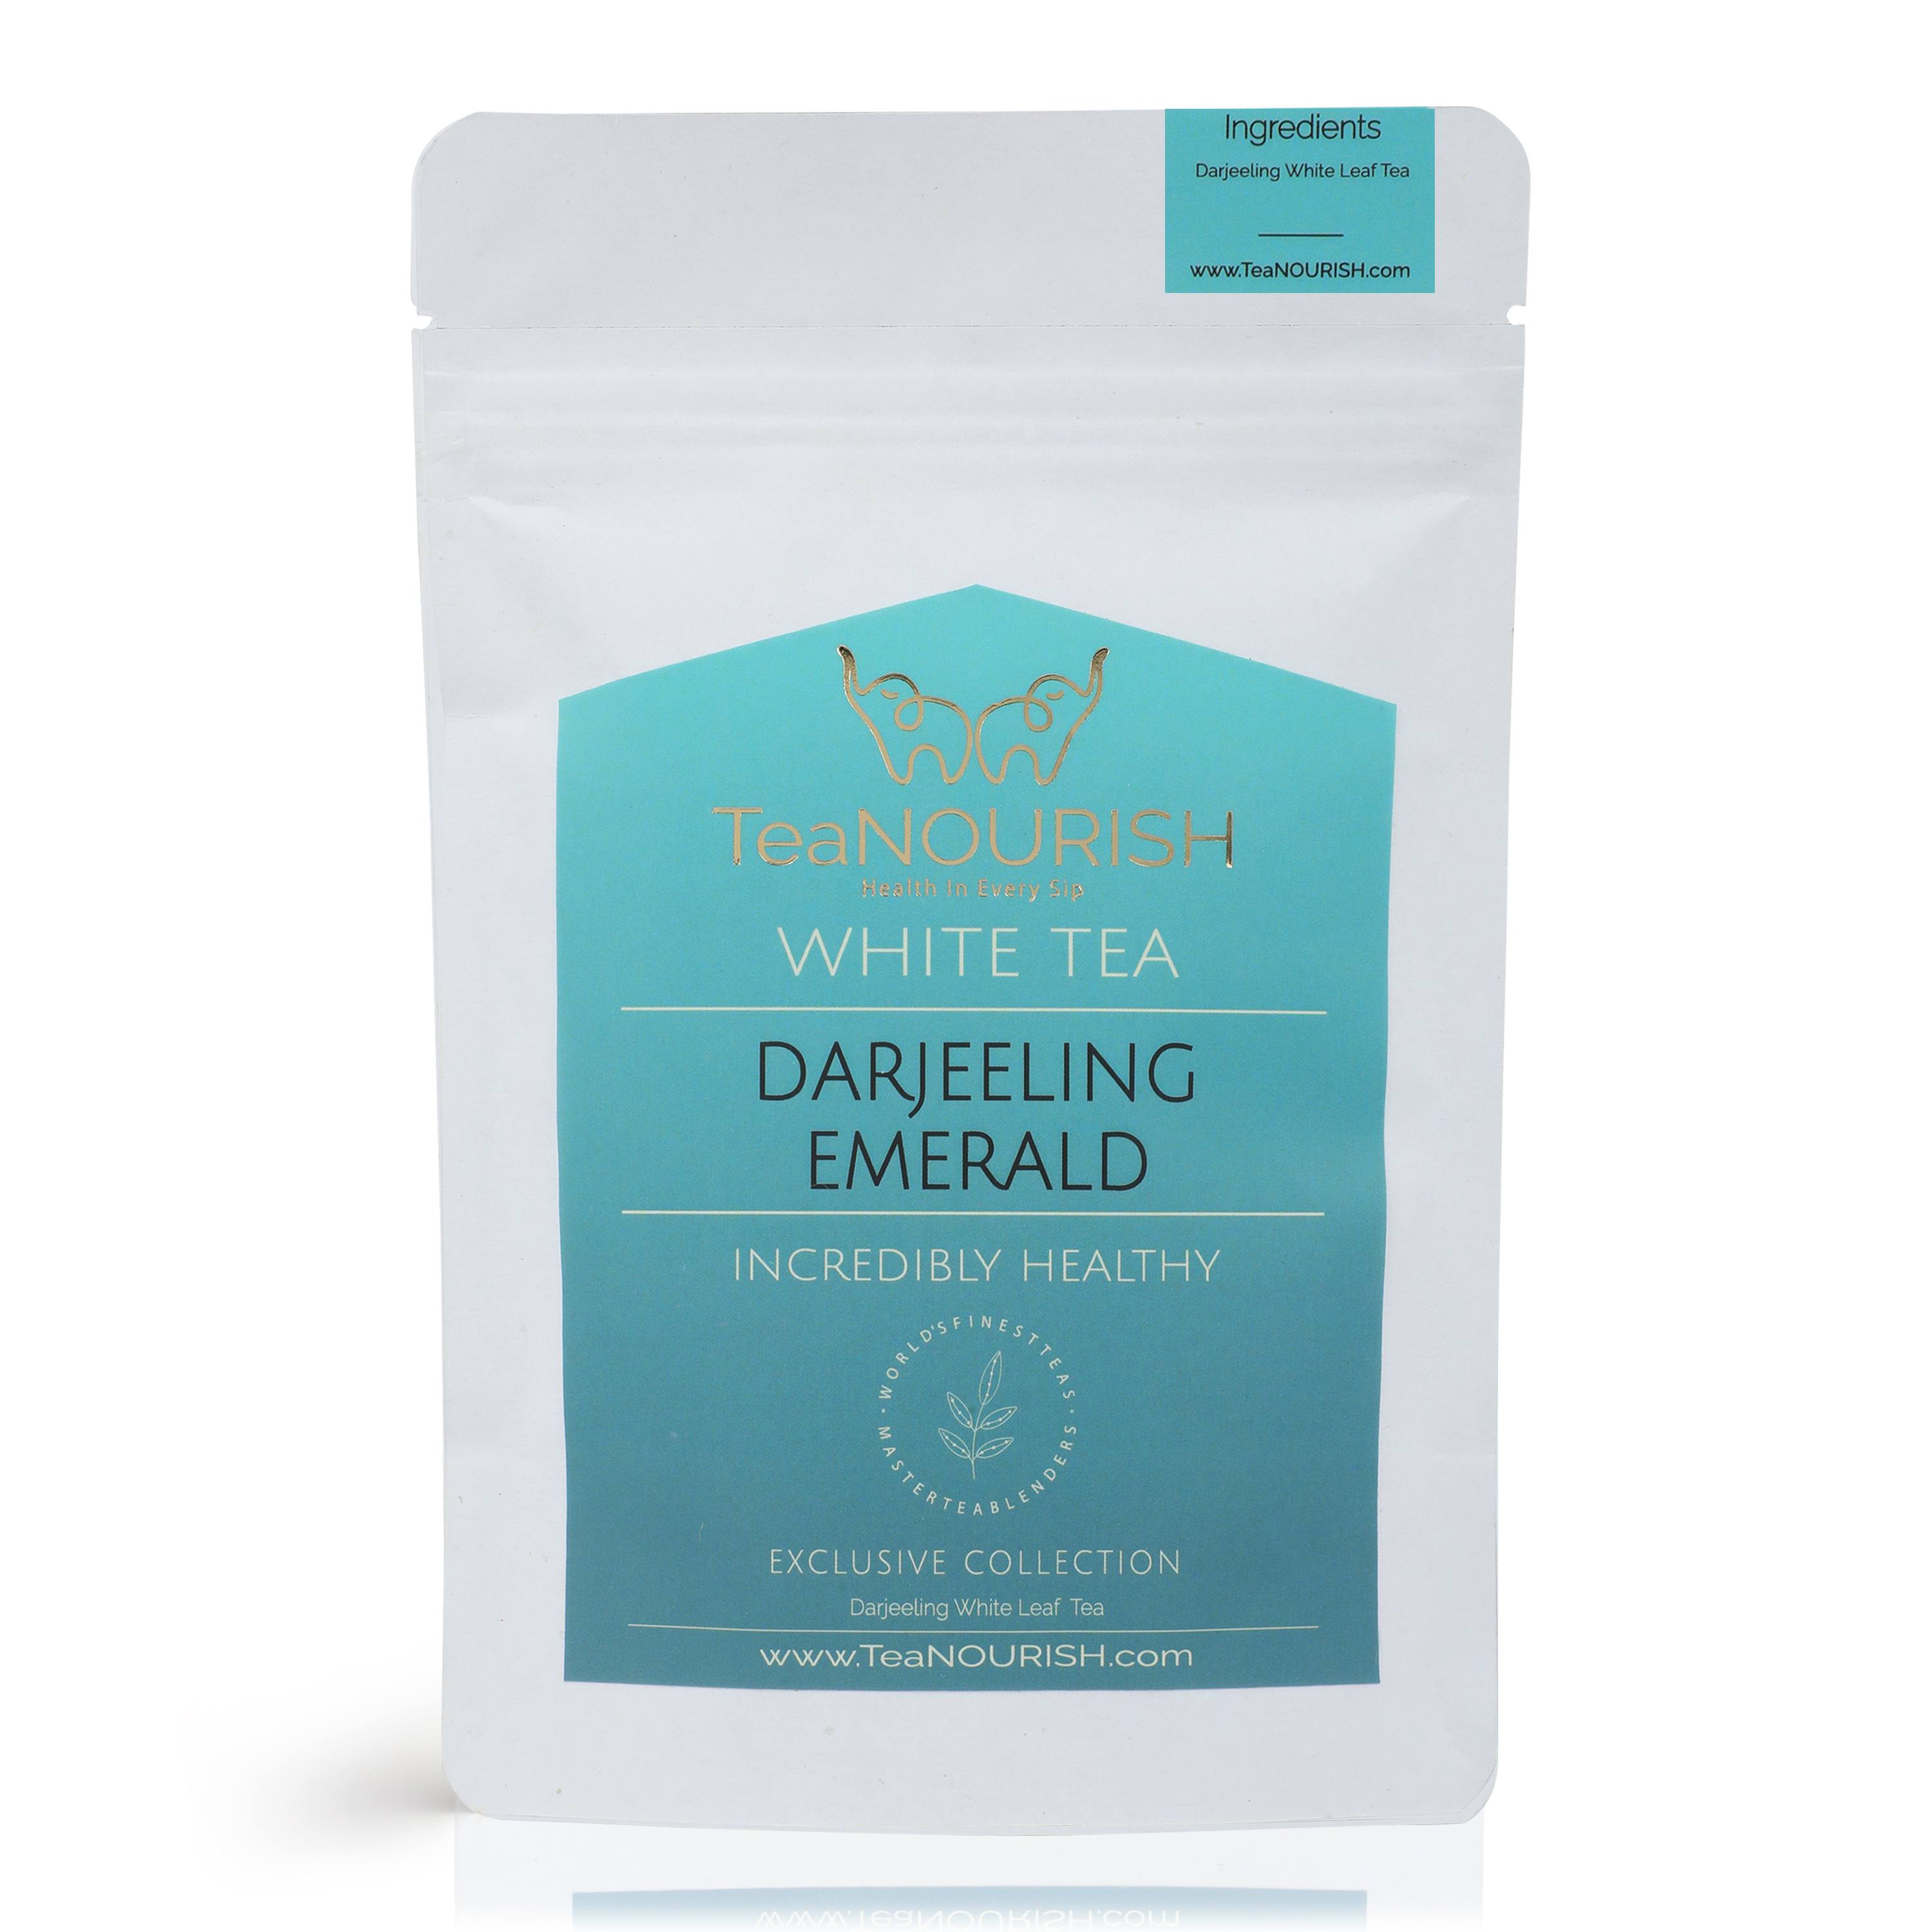 Teanourish Darjeeling Emerald White Tea